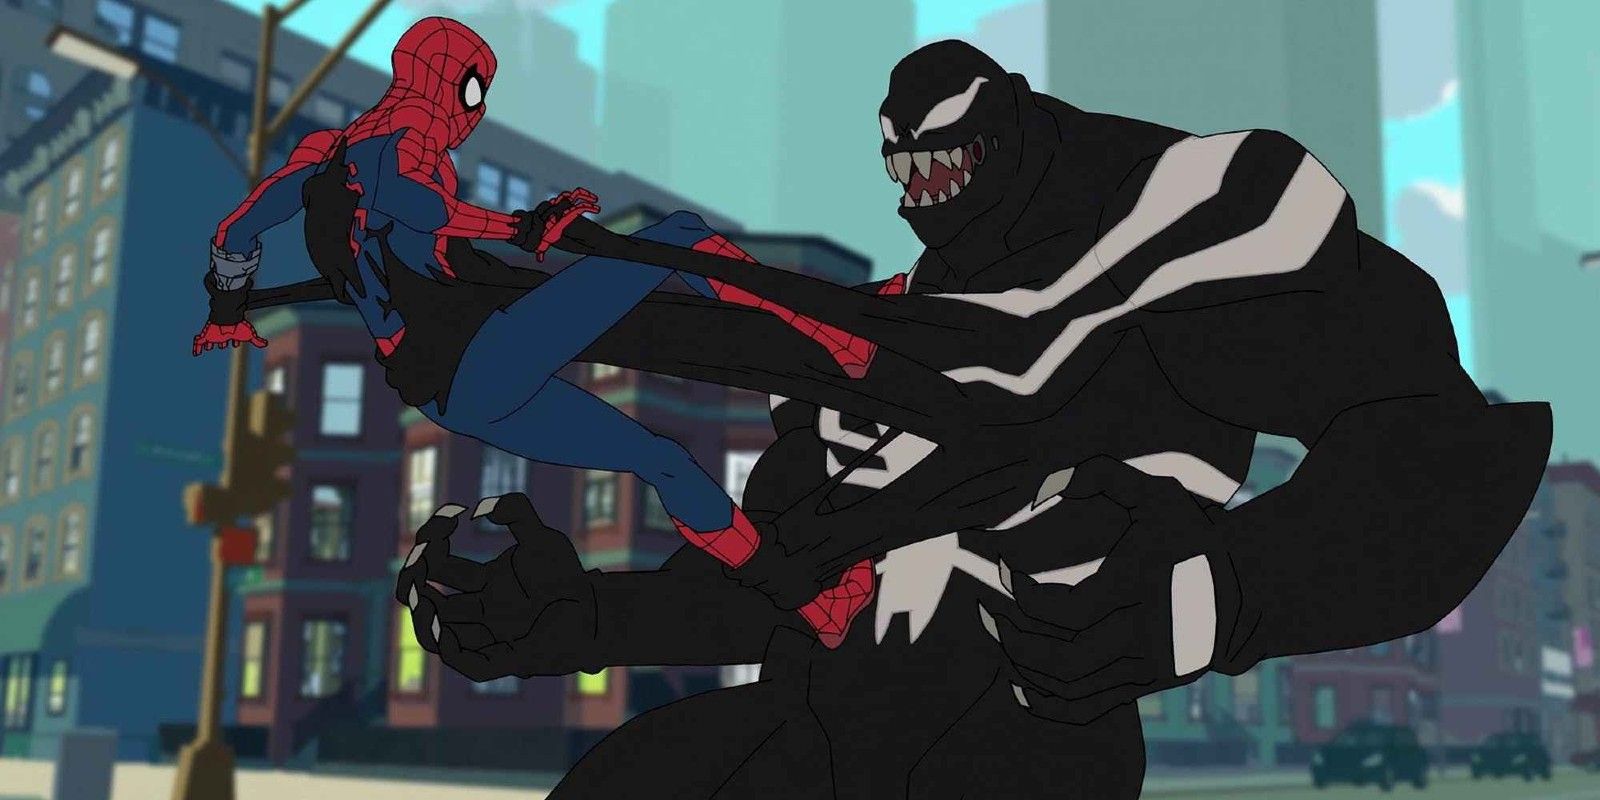 Spider-Man vs Venom in Marvel's Spider-Man